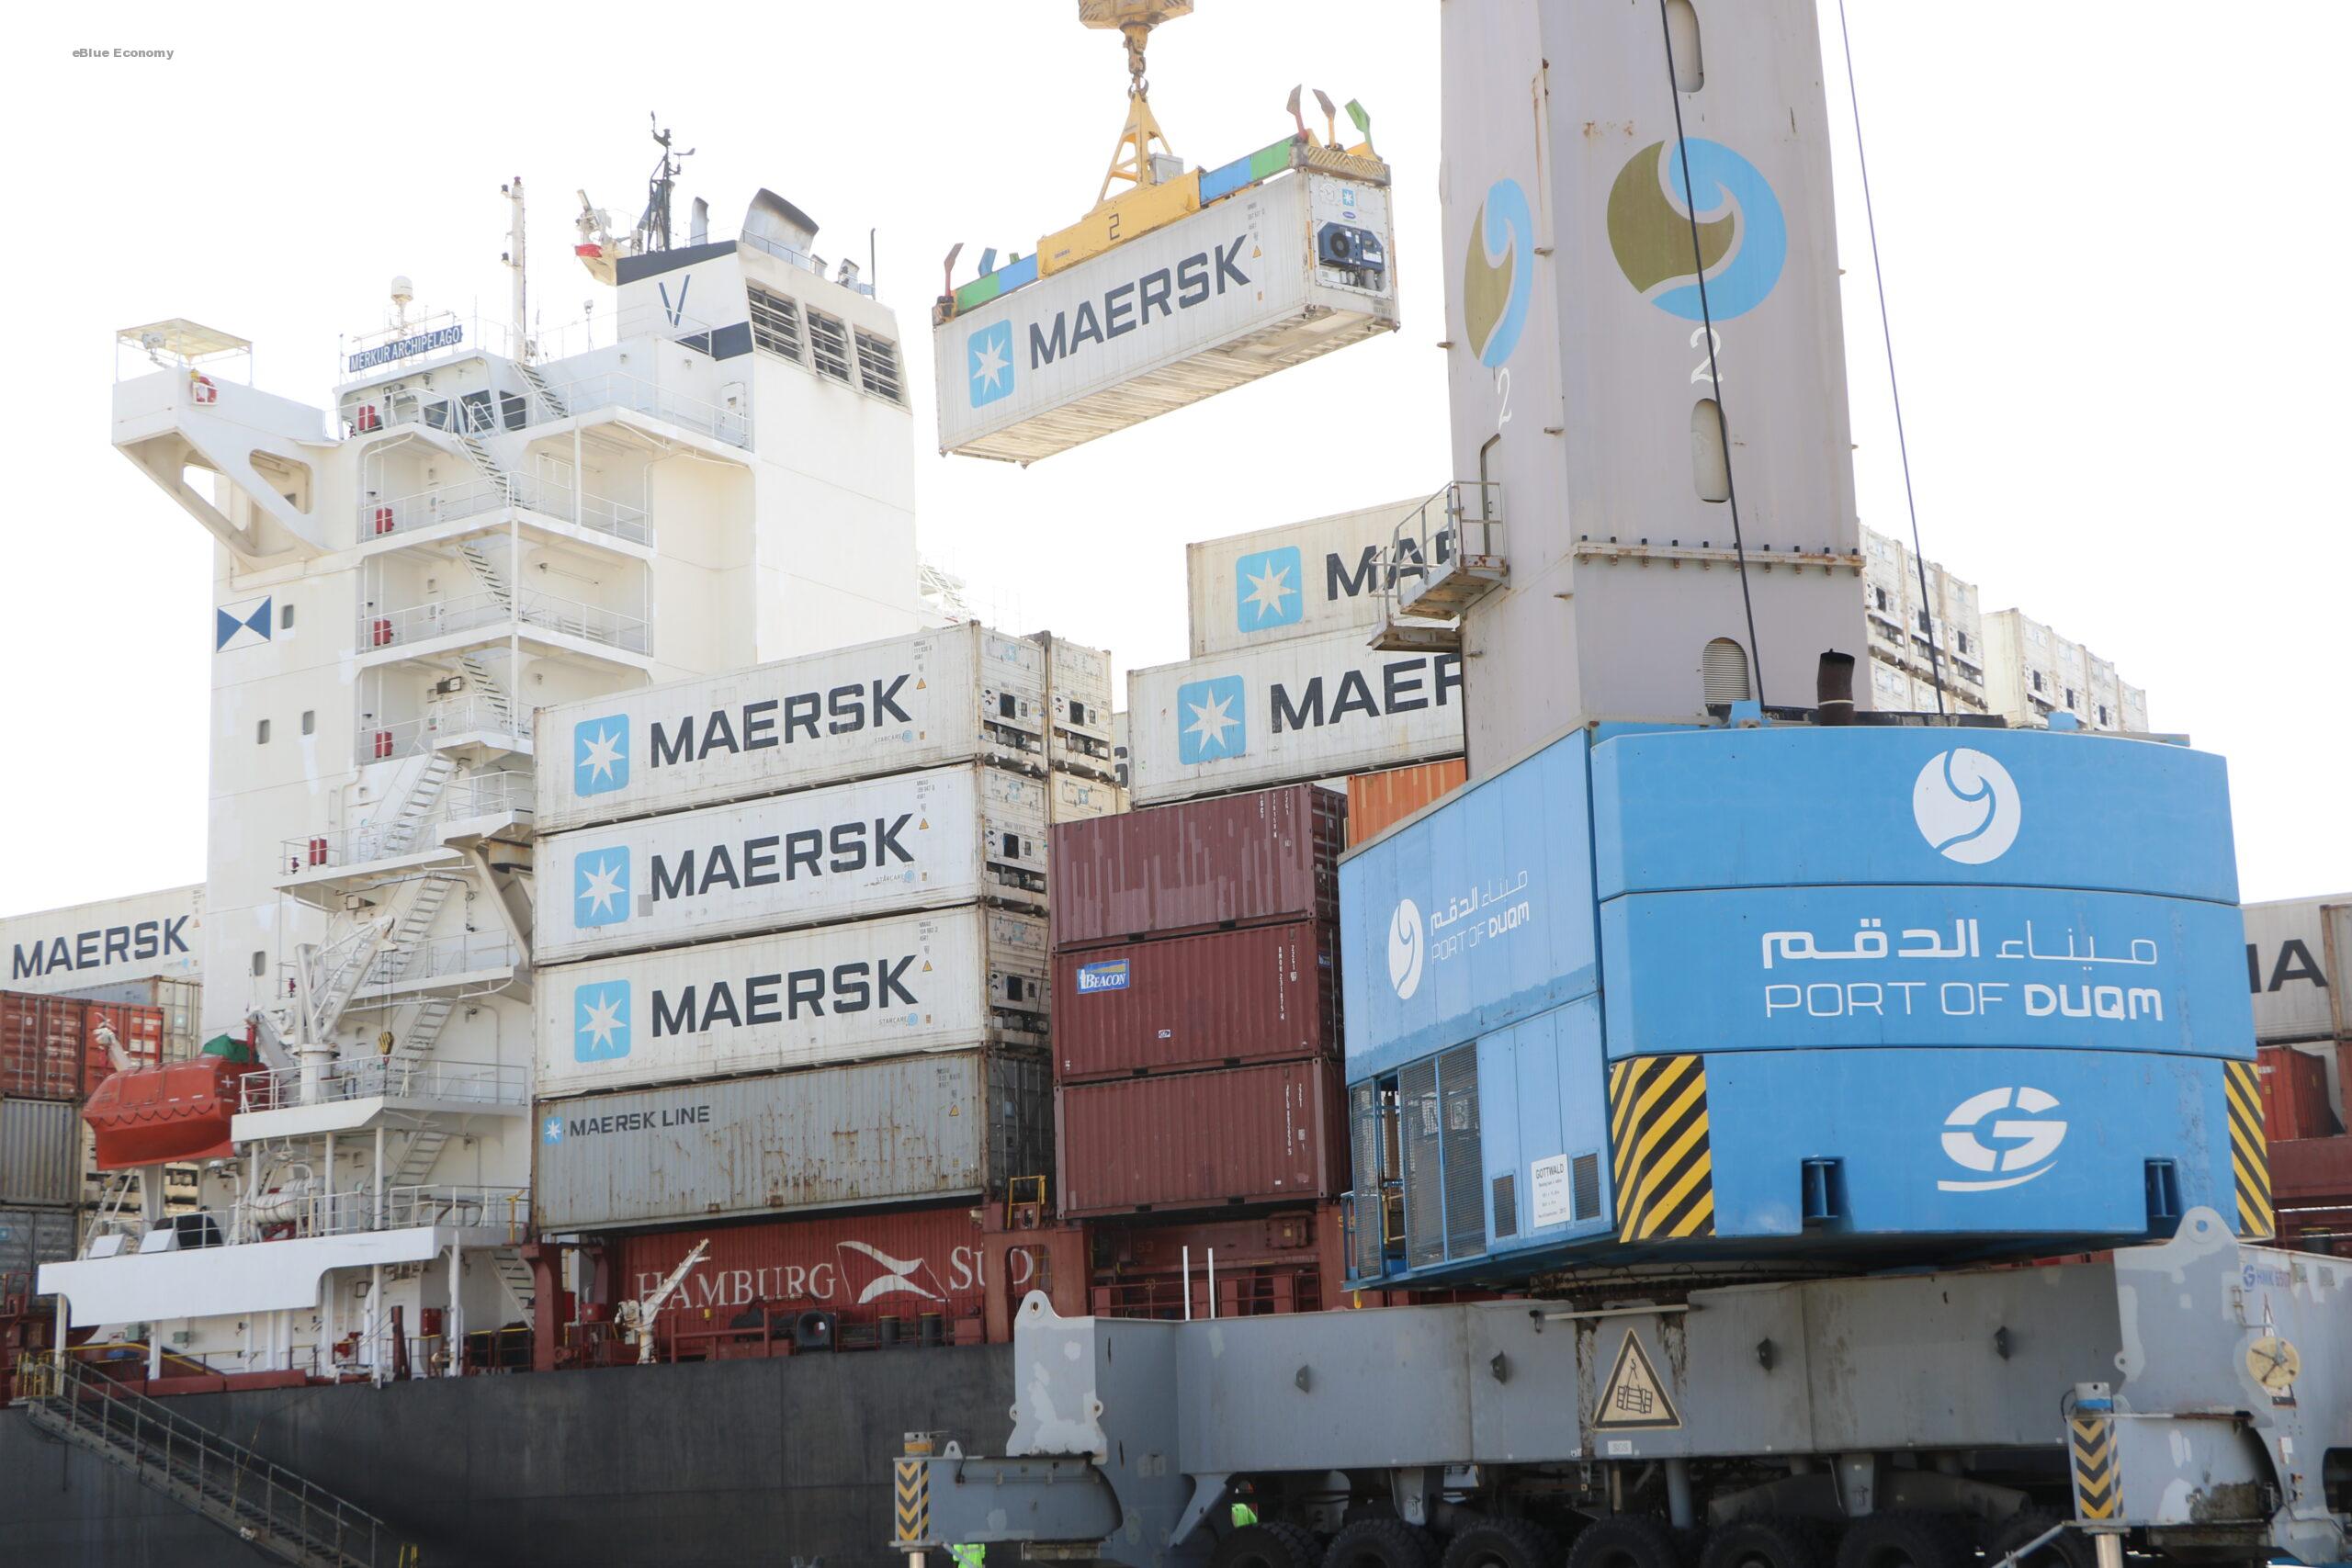 eBlue_economy_ort of Duqm is a strategic multimodal logistics hub overlooking the Arabian Sea